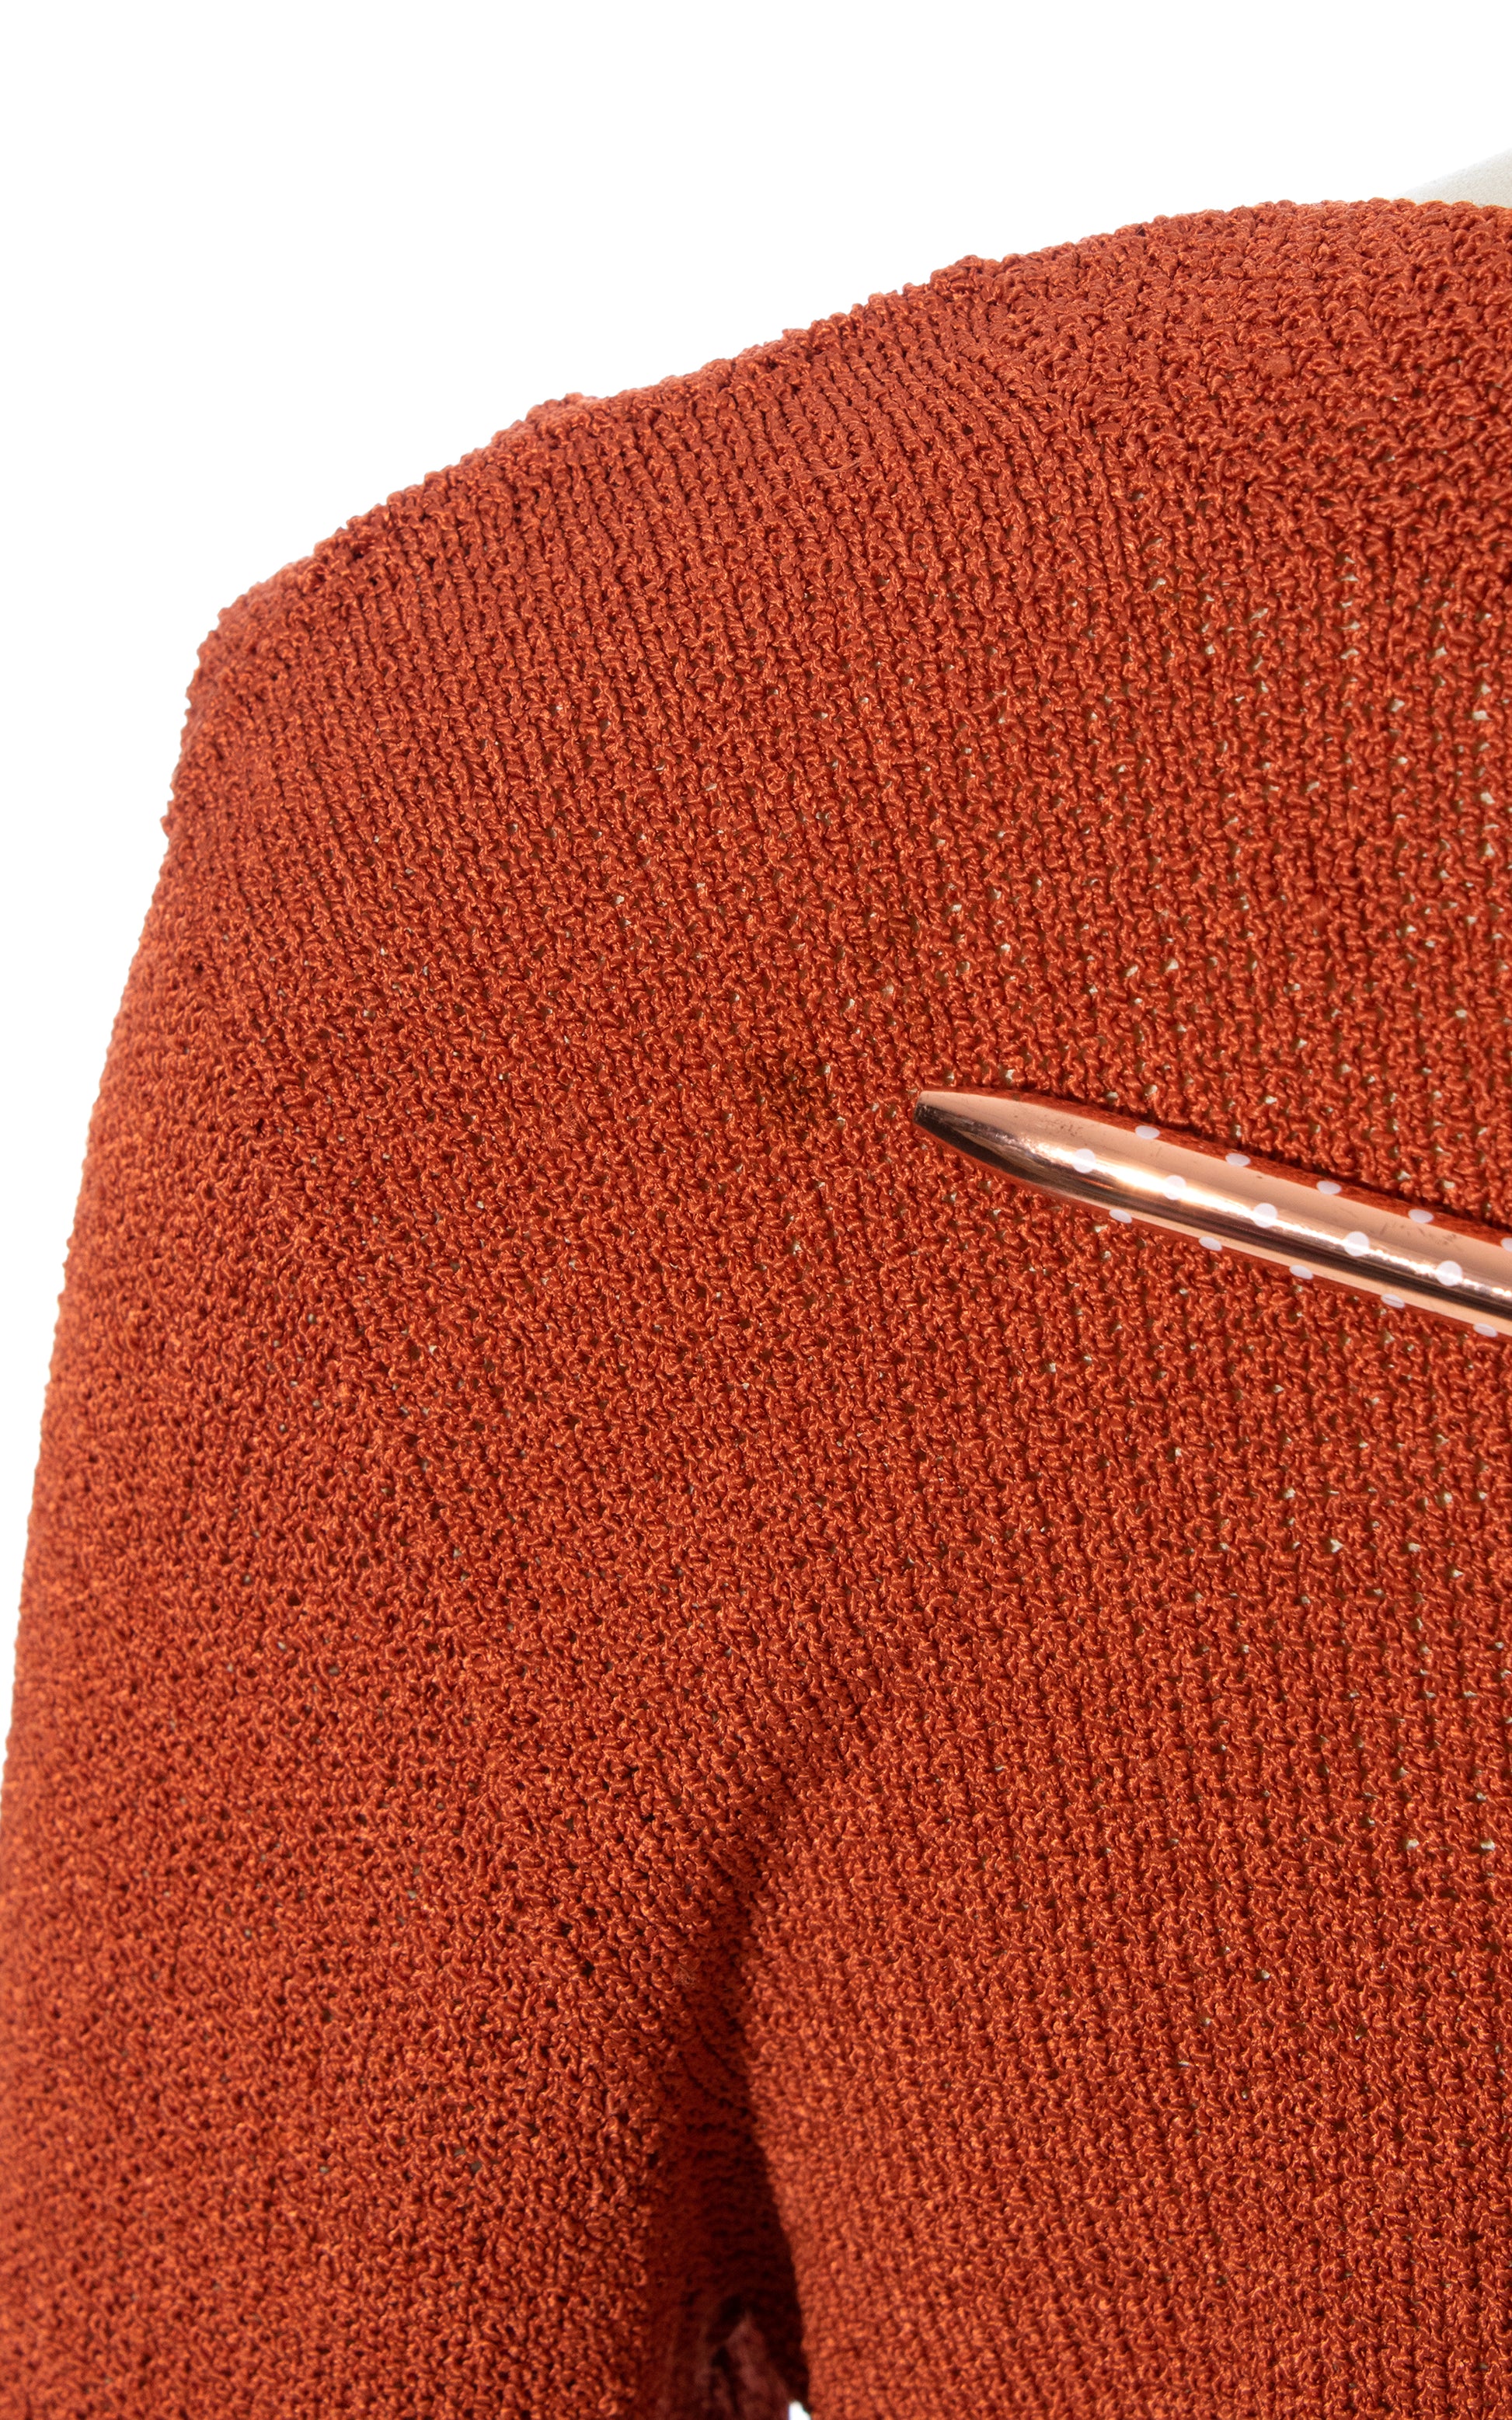 Vintage 30s 1930s Rust Orange Knit Rayon Sweater Top BirthdayLifeVintage